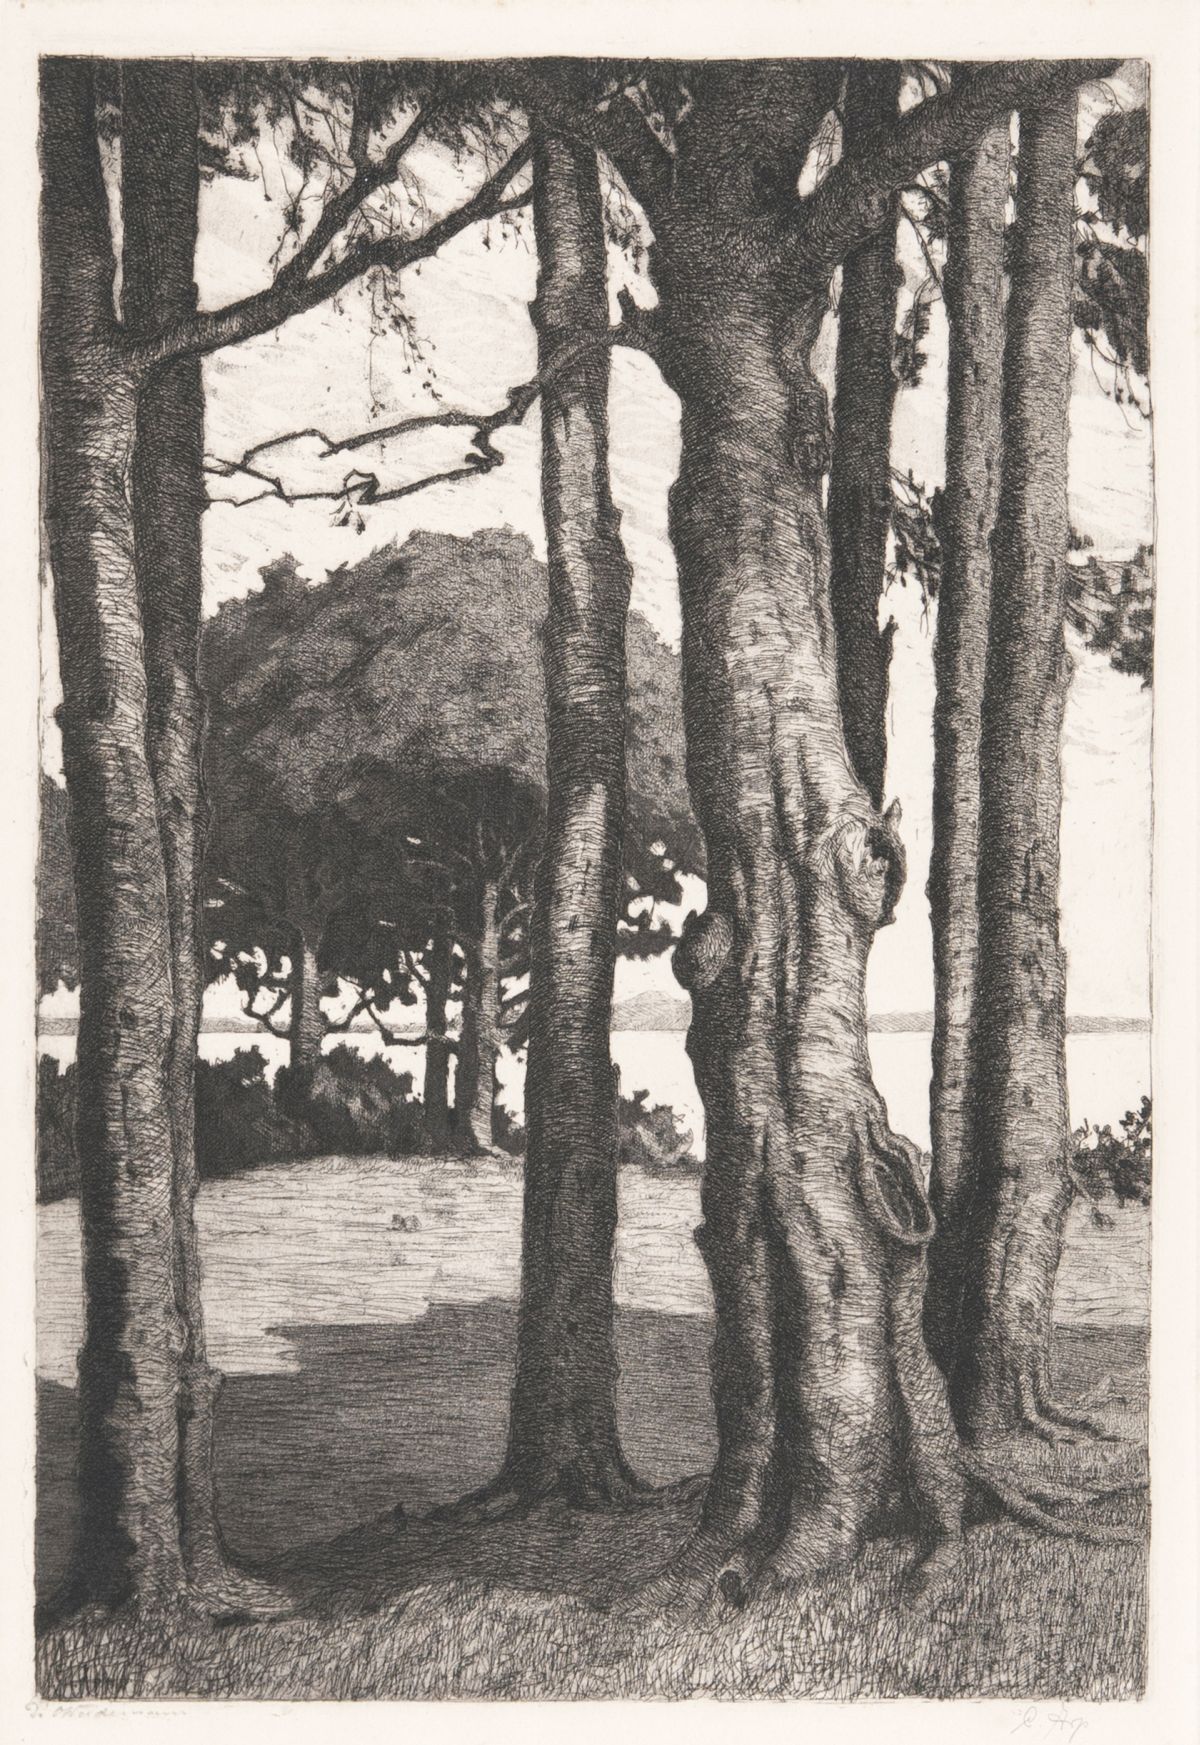 Bäume am See